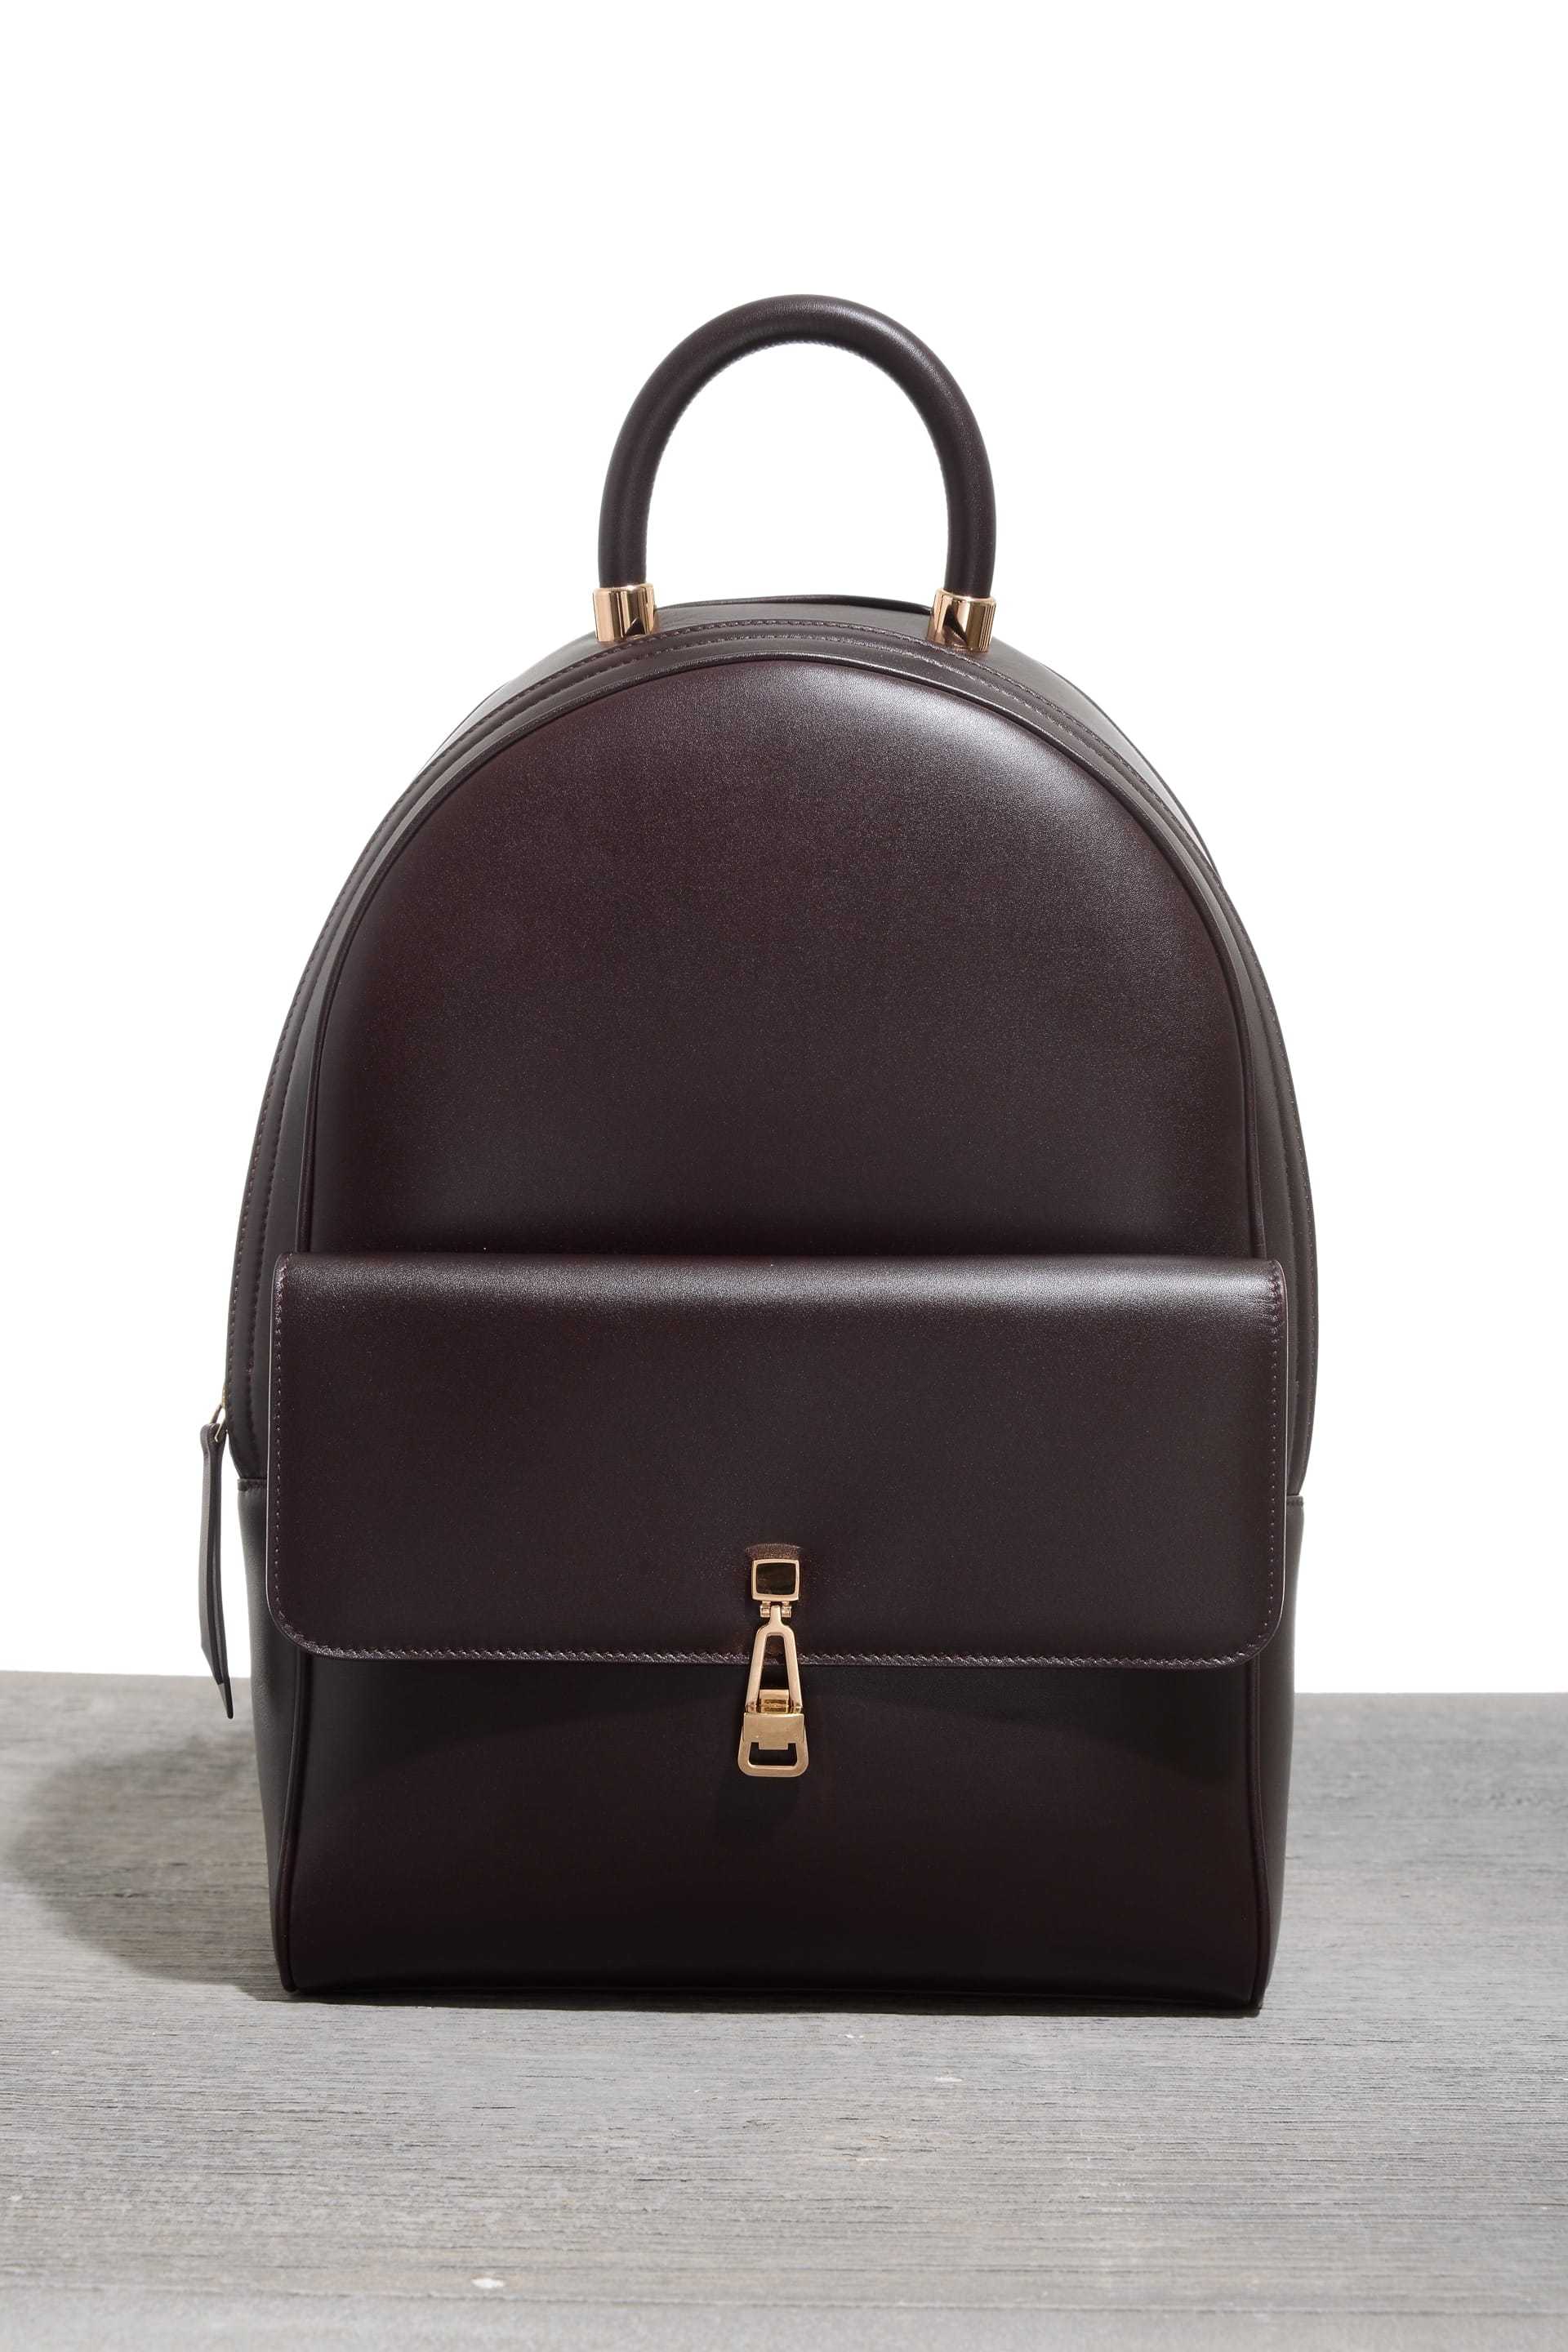  Gabriela Hearst Billie bag in bordeaux, $3,295, at Bergdorf Goodman and Net-a-Porter 